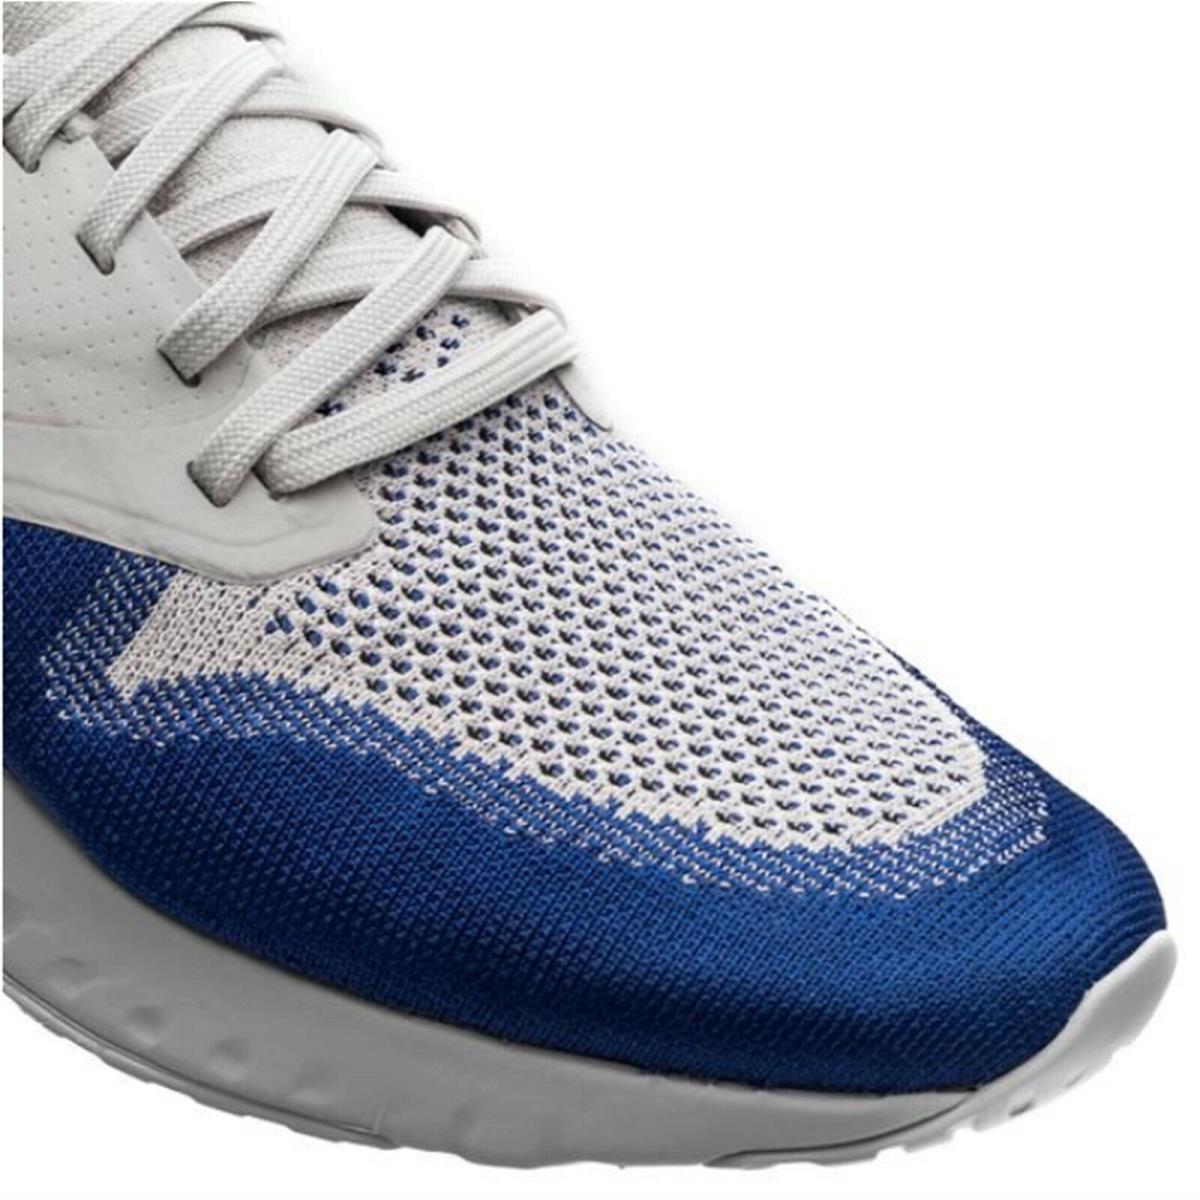 Nike shoes Odyssey React Flyknit - VAST GREY / GAME ROYAL , VAST GREY / GAME ROYAL Manufacturer 4